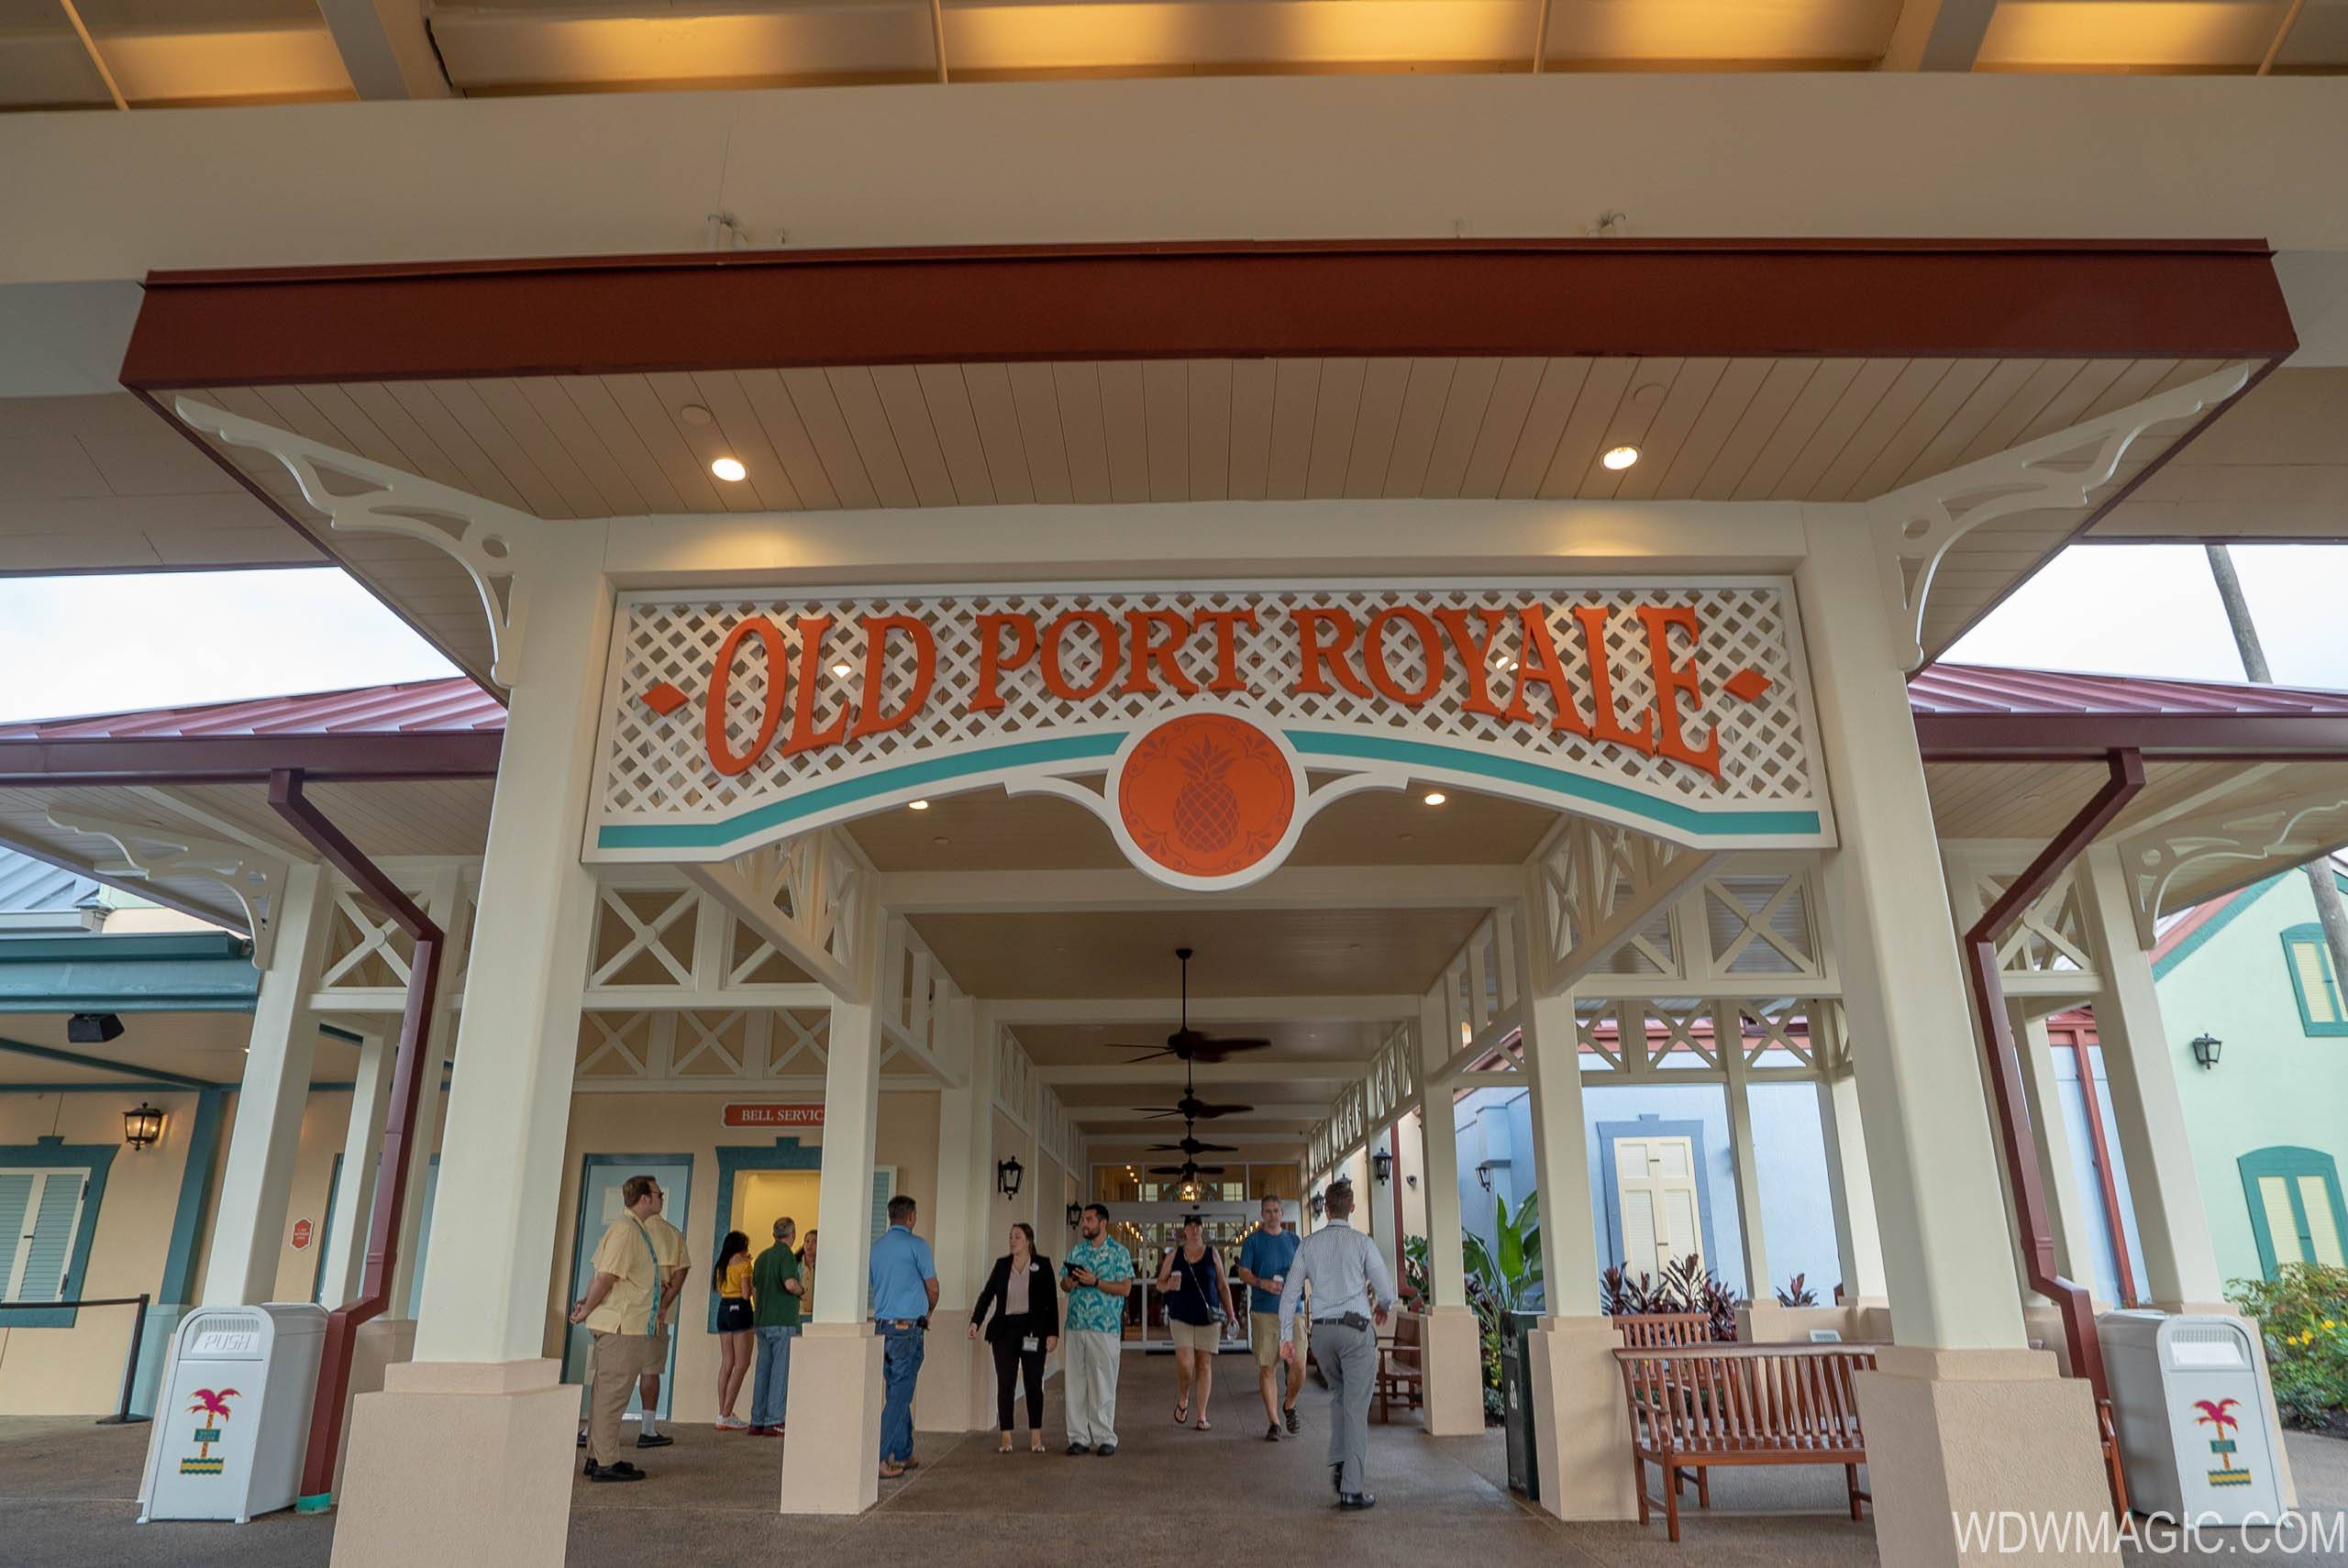 Disney's Caribbean Beach Resort